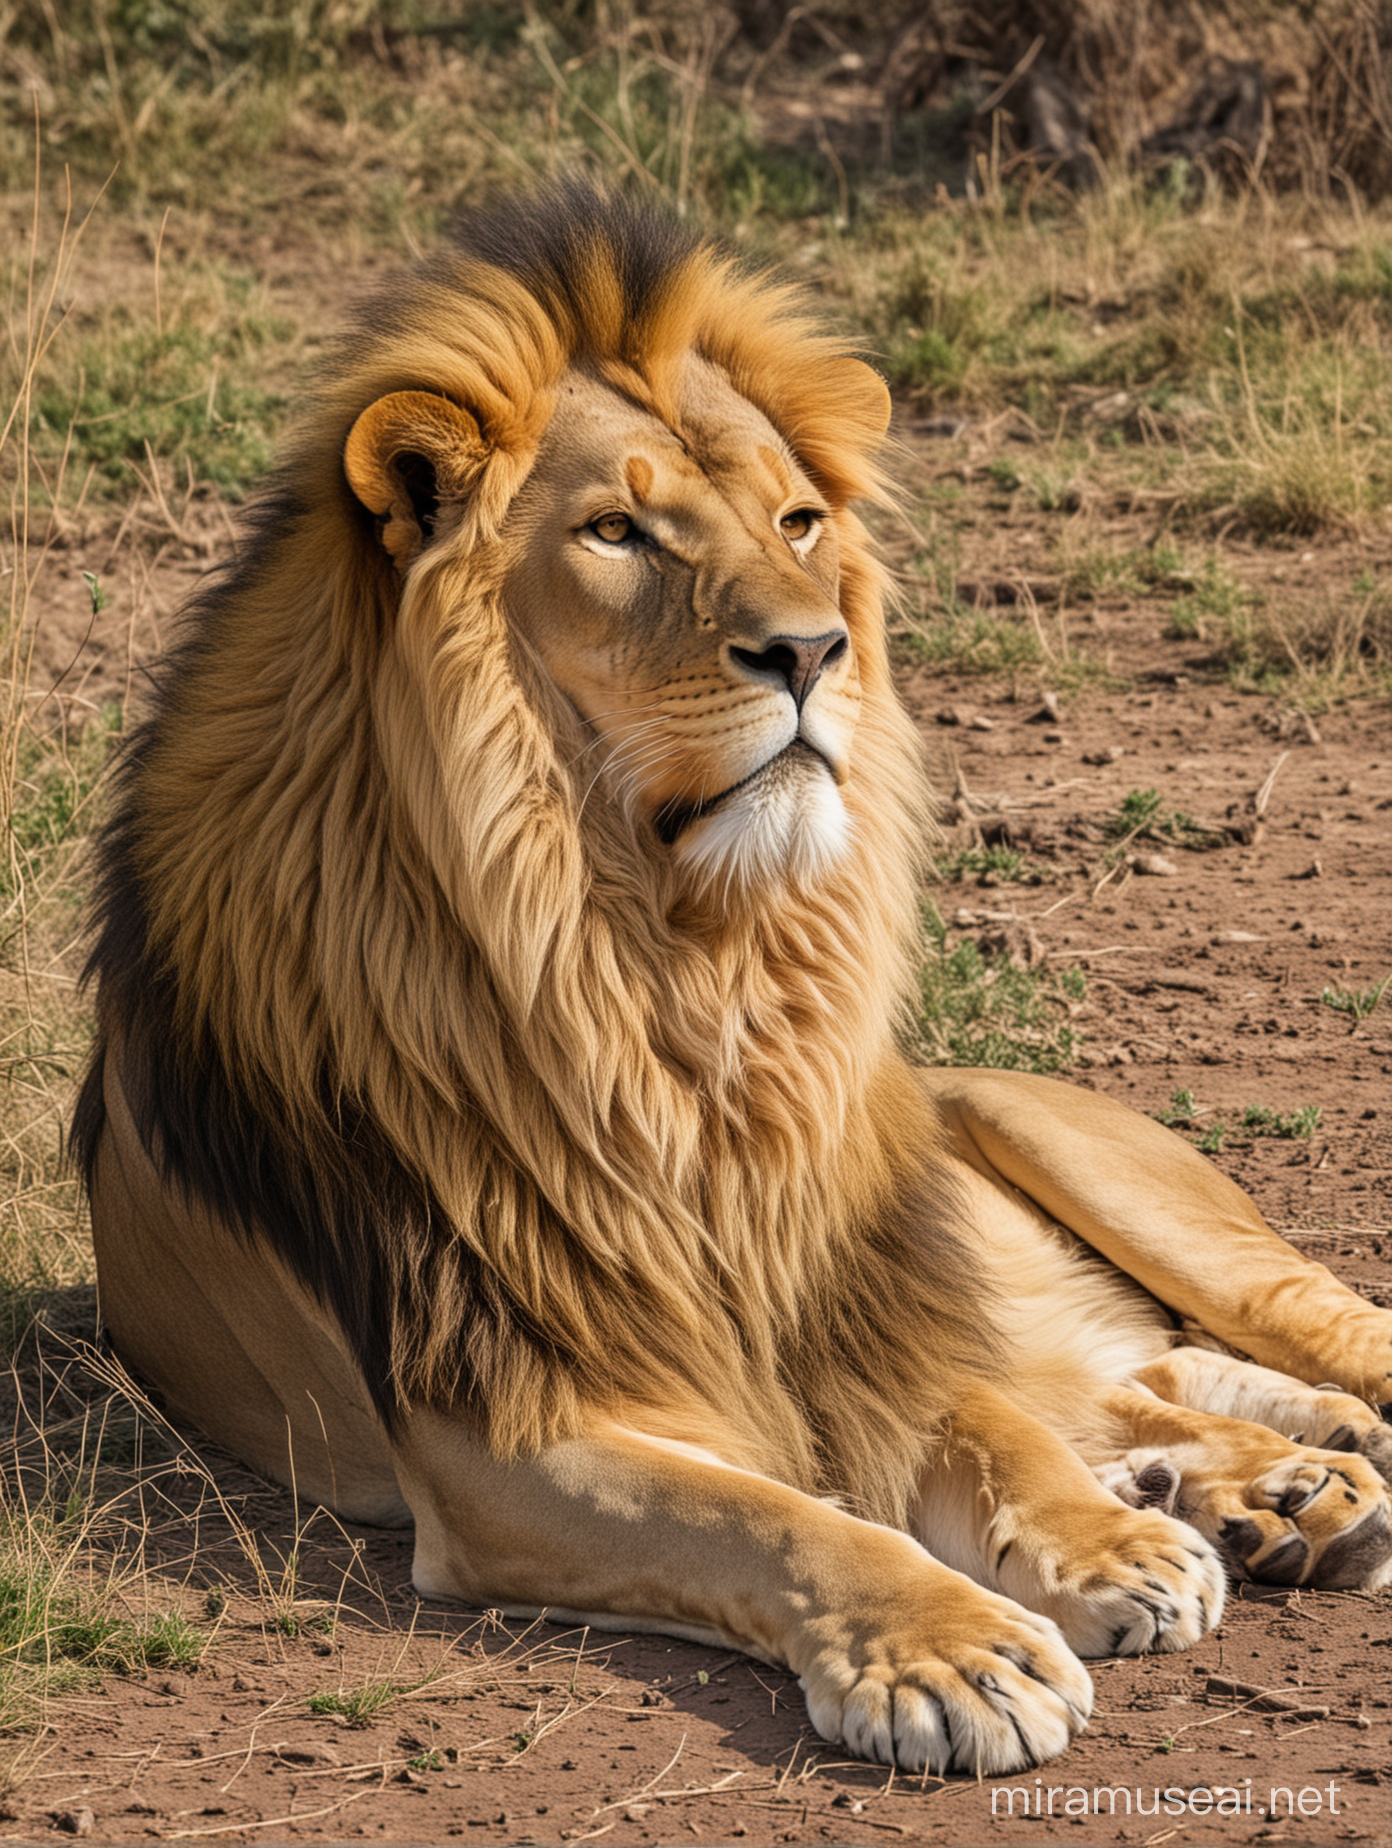 Majestic Lion Resting in Serene Savannah Landscape